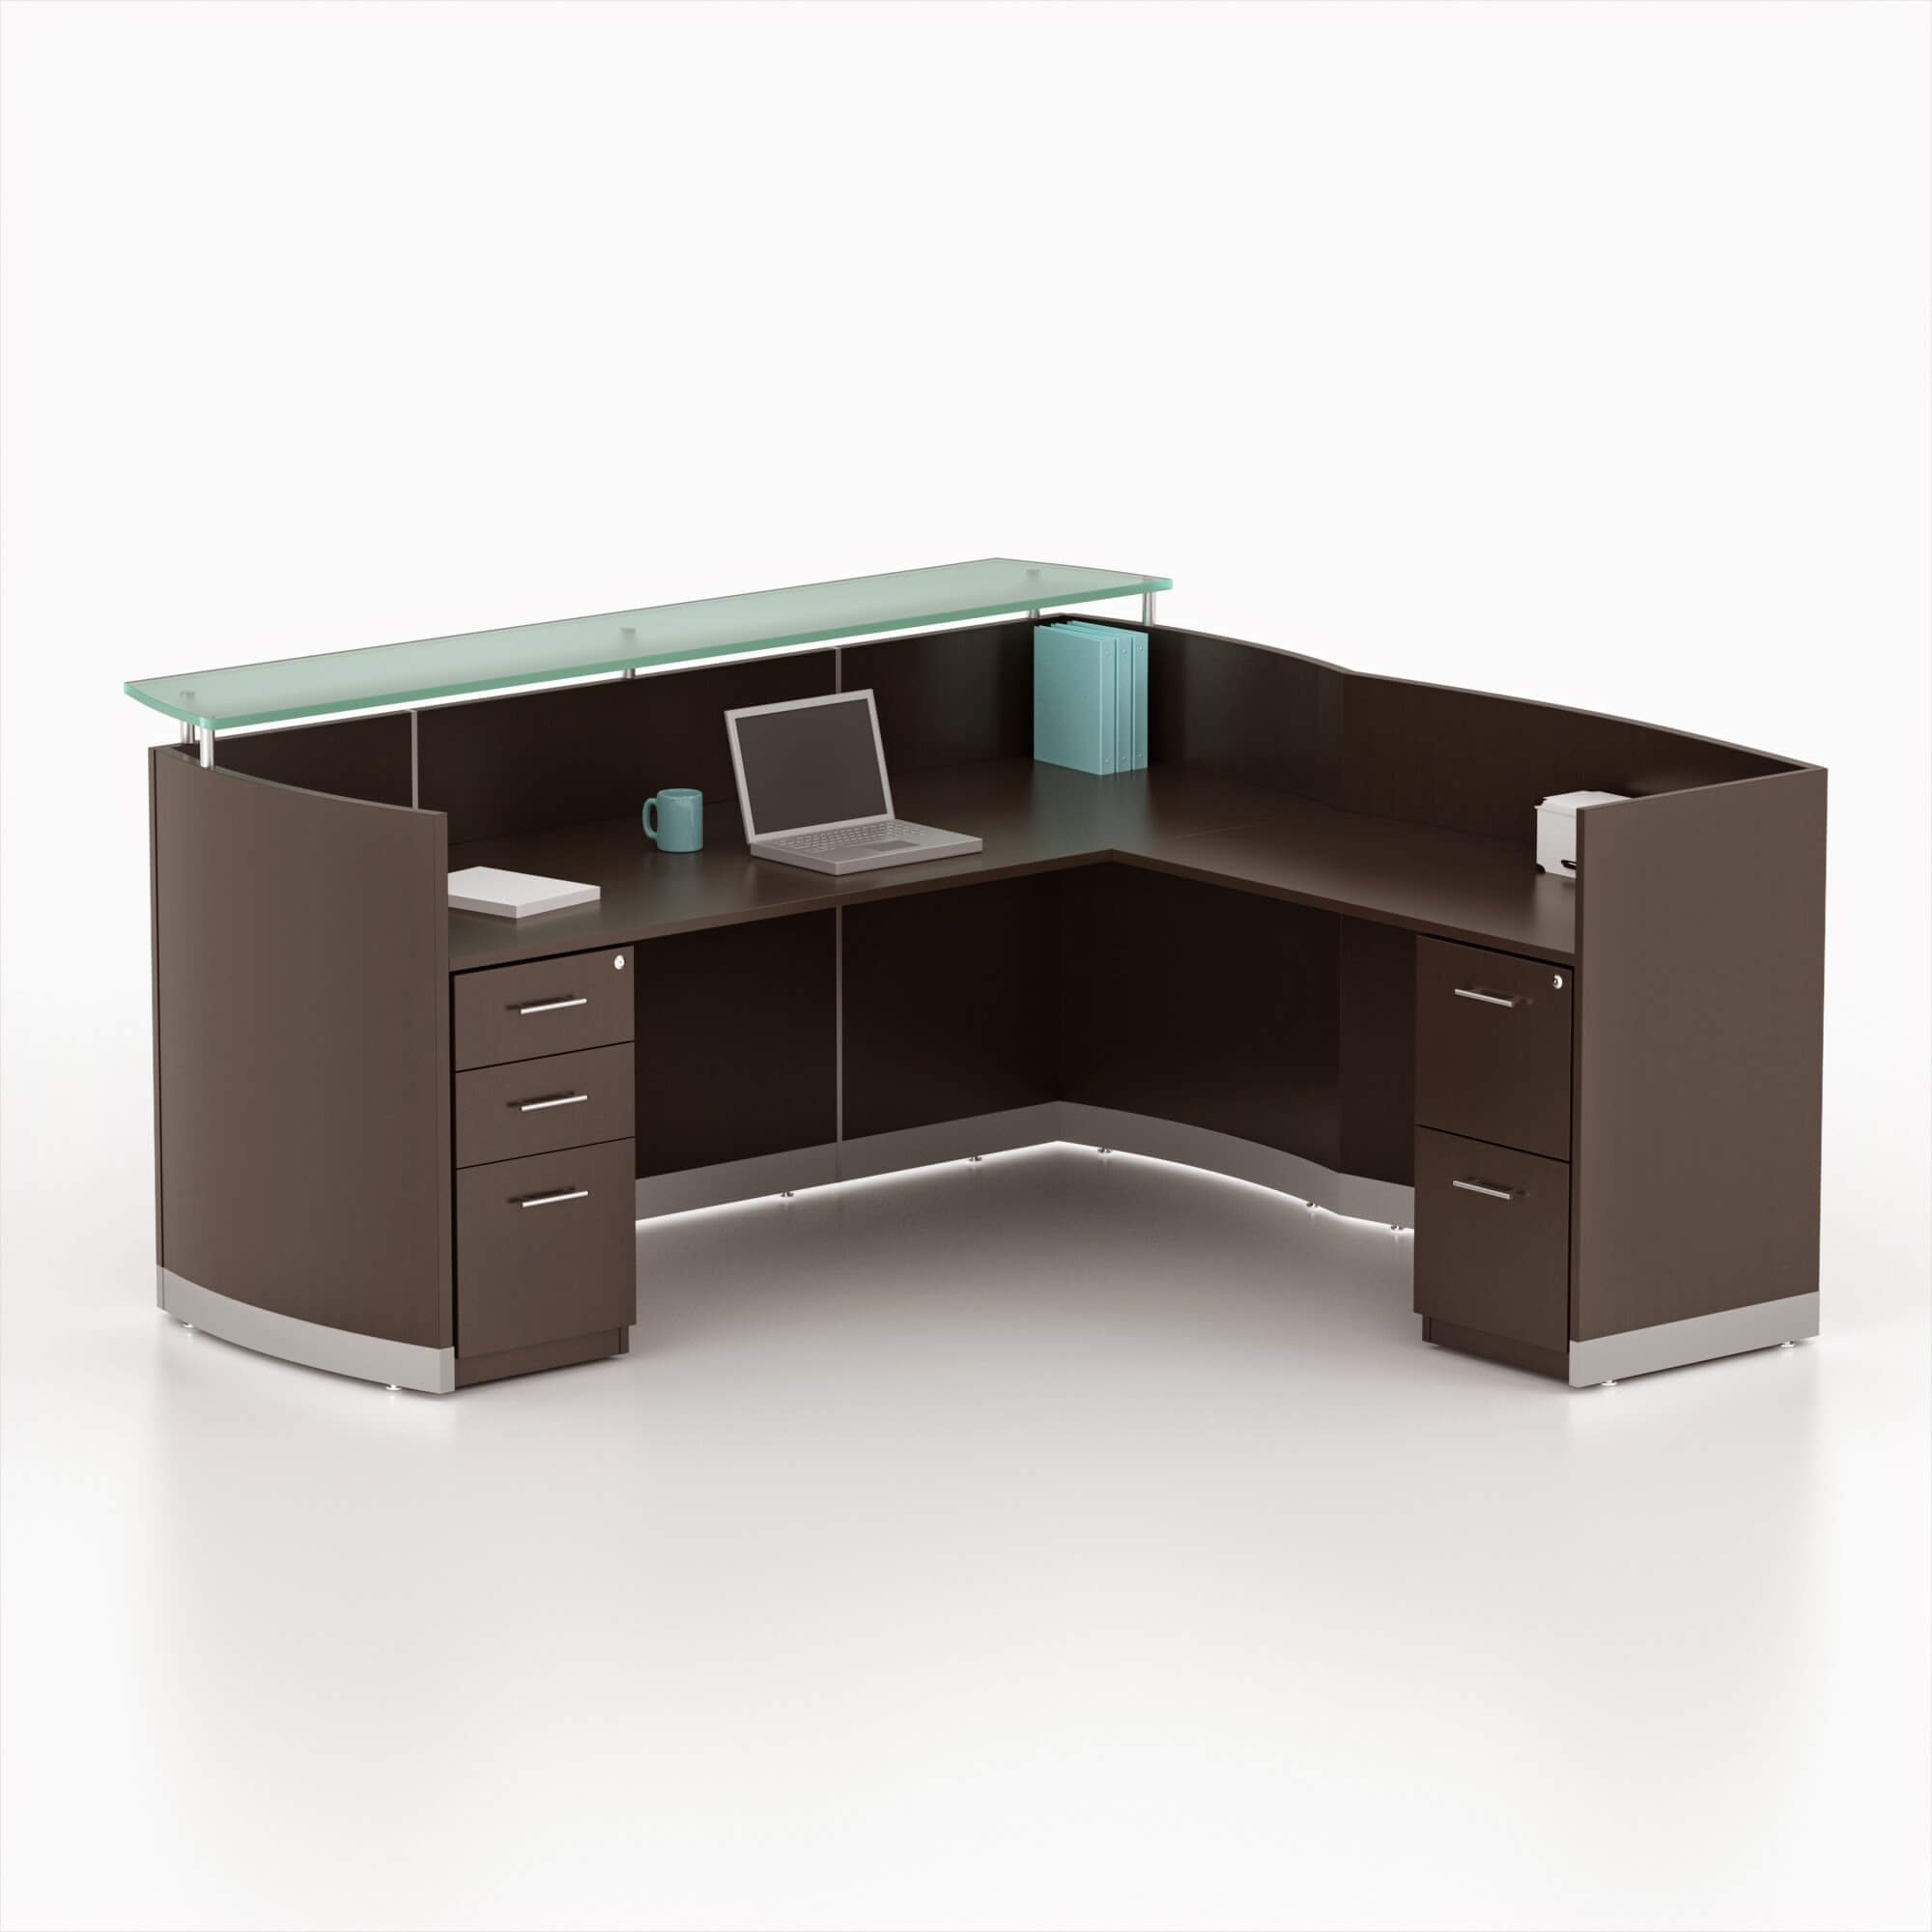 L shaped reeption desk CUB MNRSLBB MOCH MAY